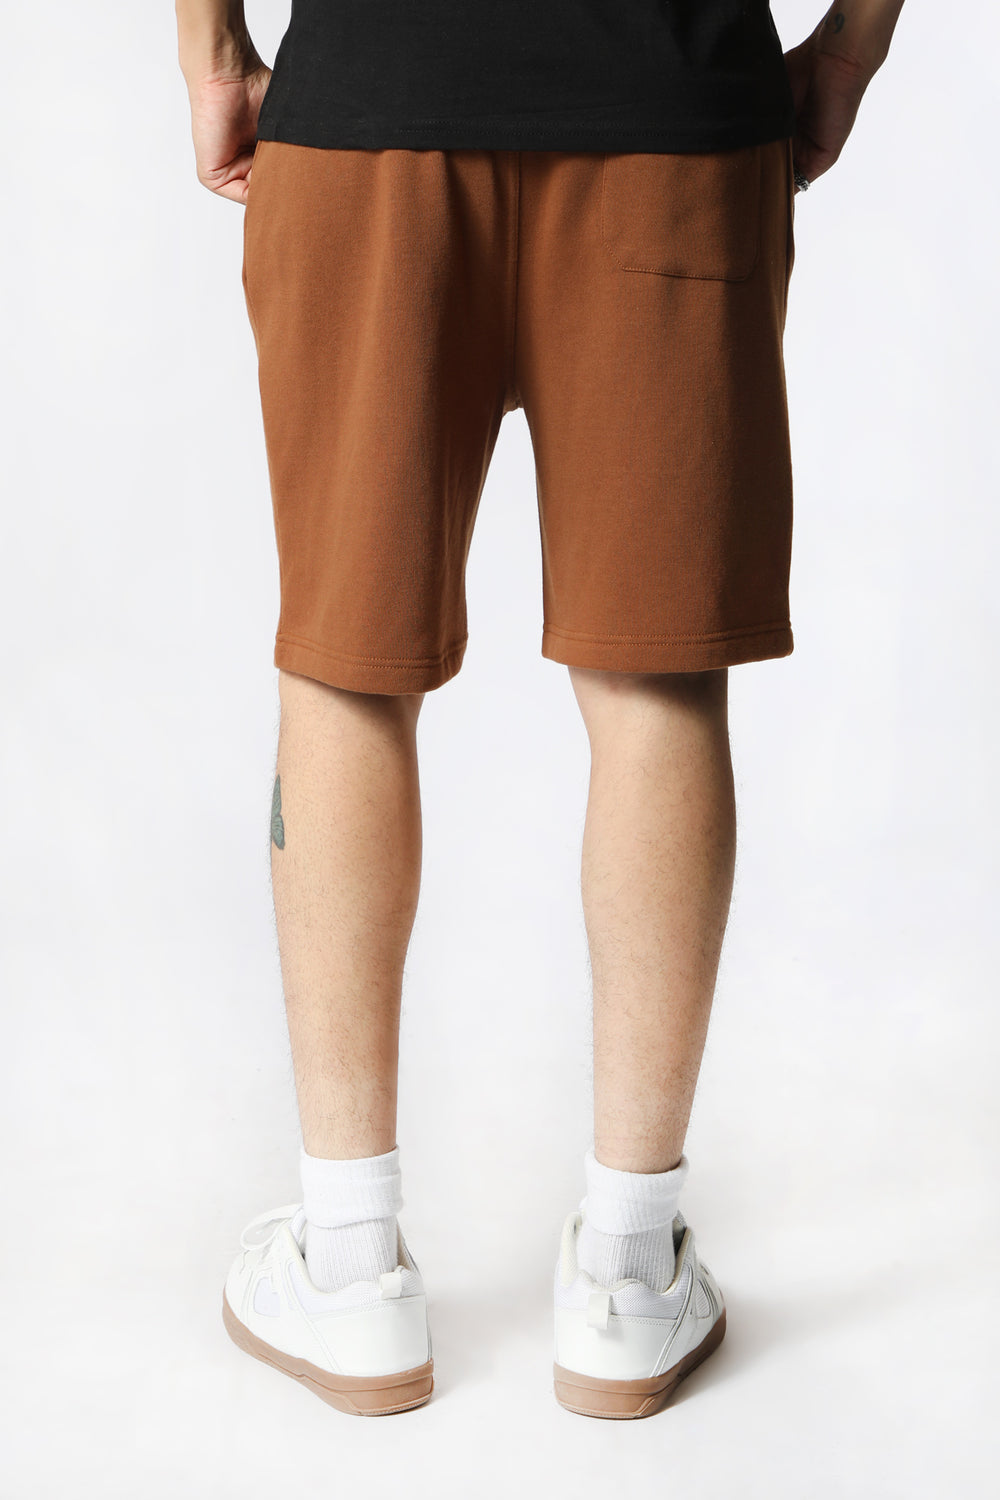 Amnesia Mens Basic Fleece Shorts Medium Brown